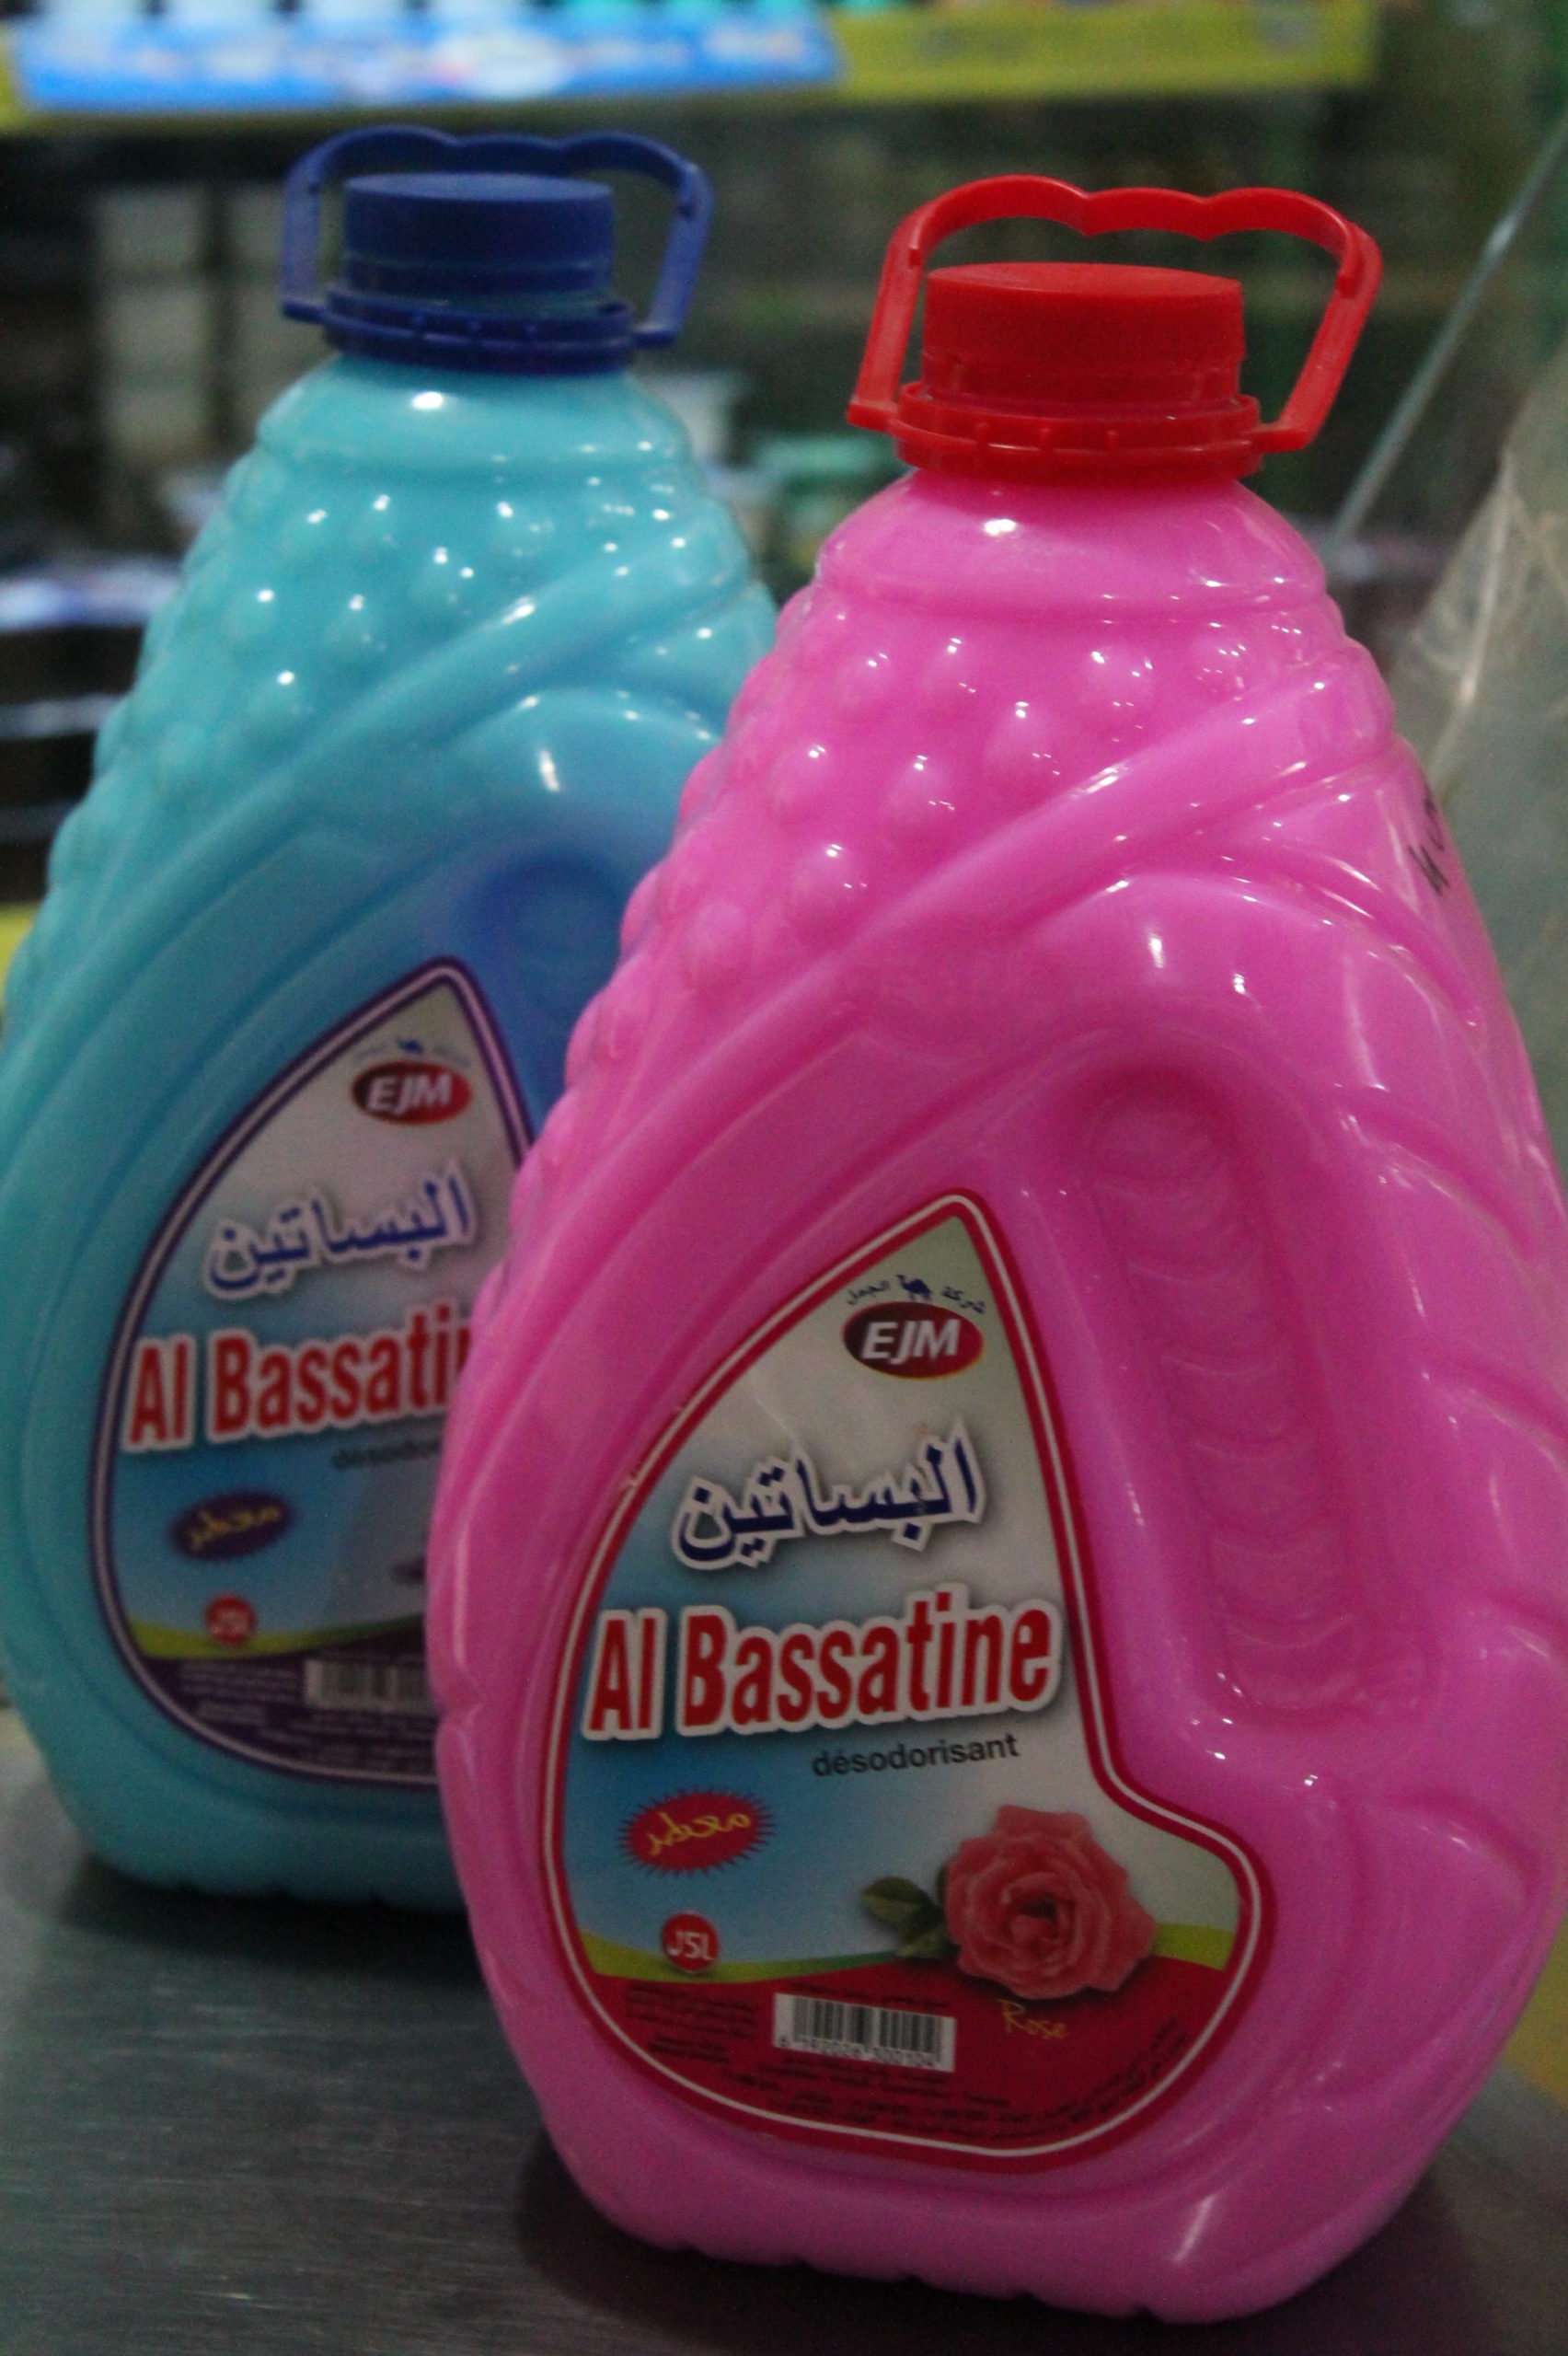 albassatine desodorisant lavange rose 5 litre